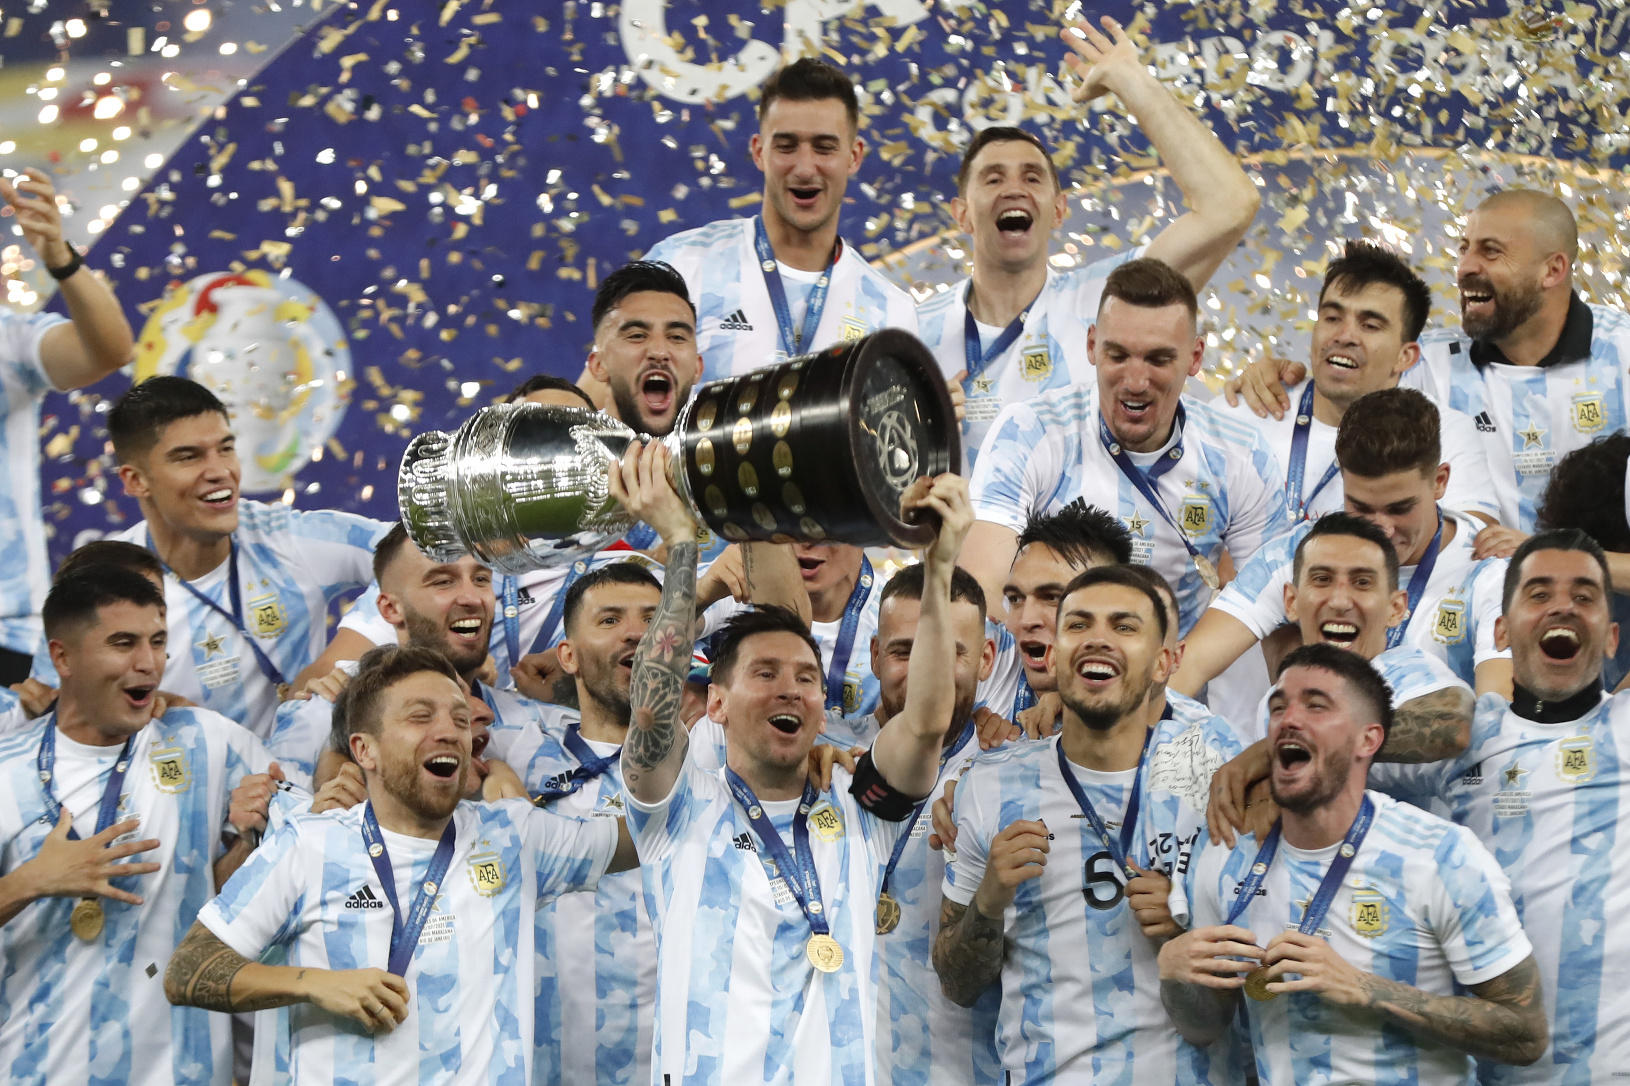 Argentina beats Brazil to Lift Copa America 2021_50.1